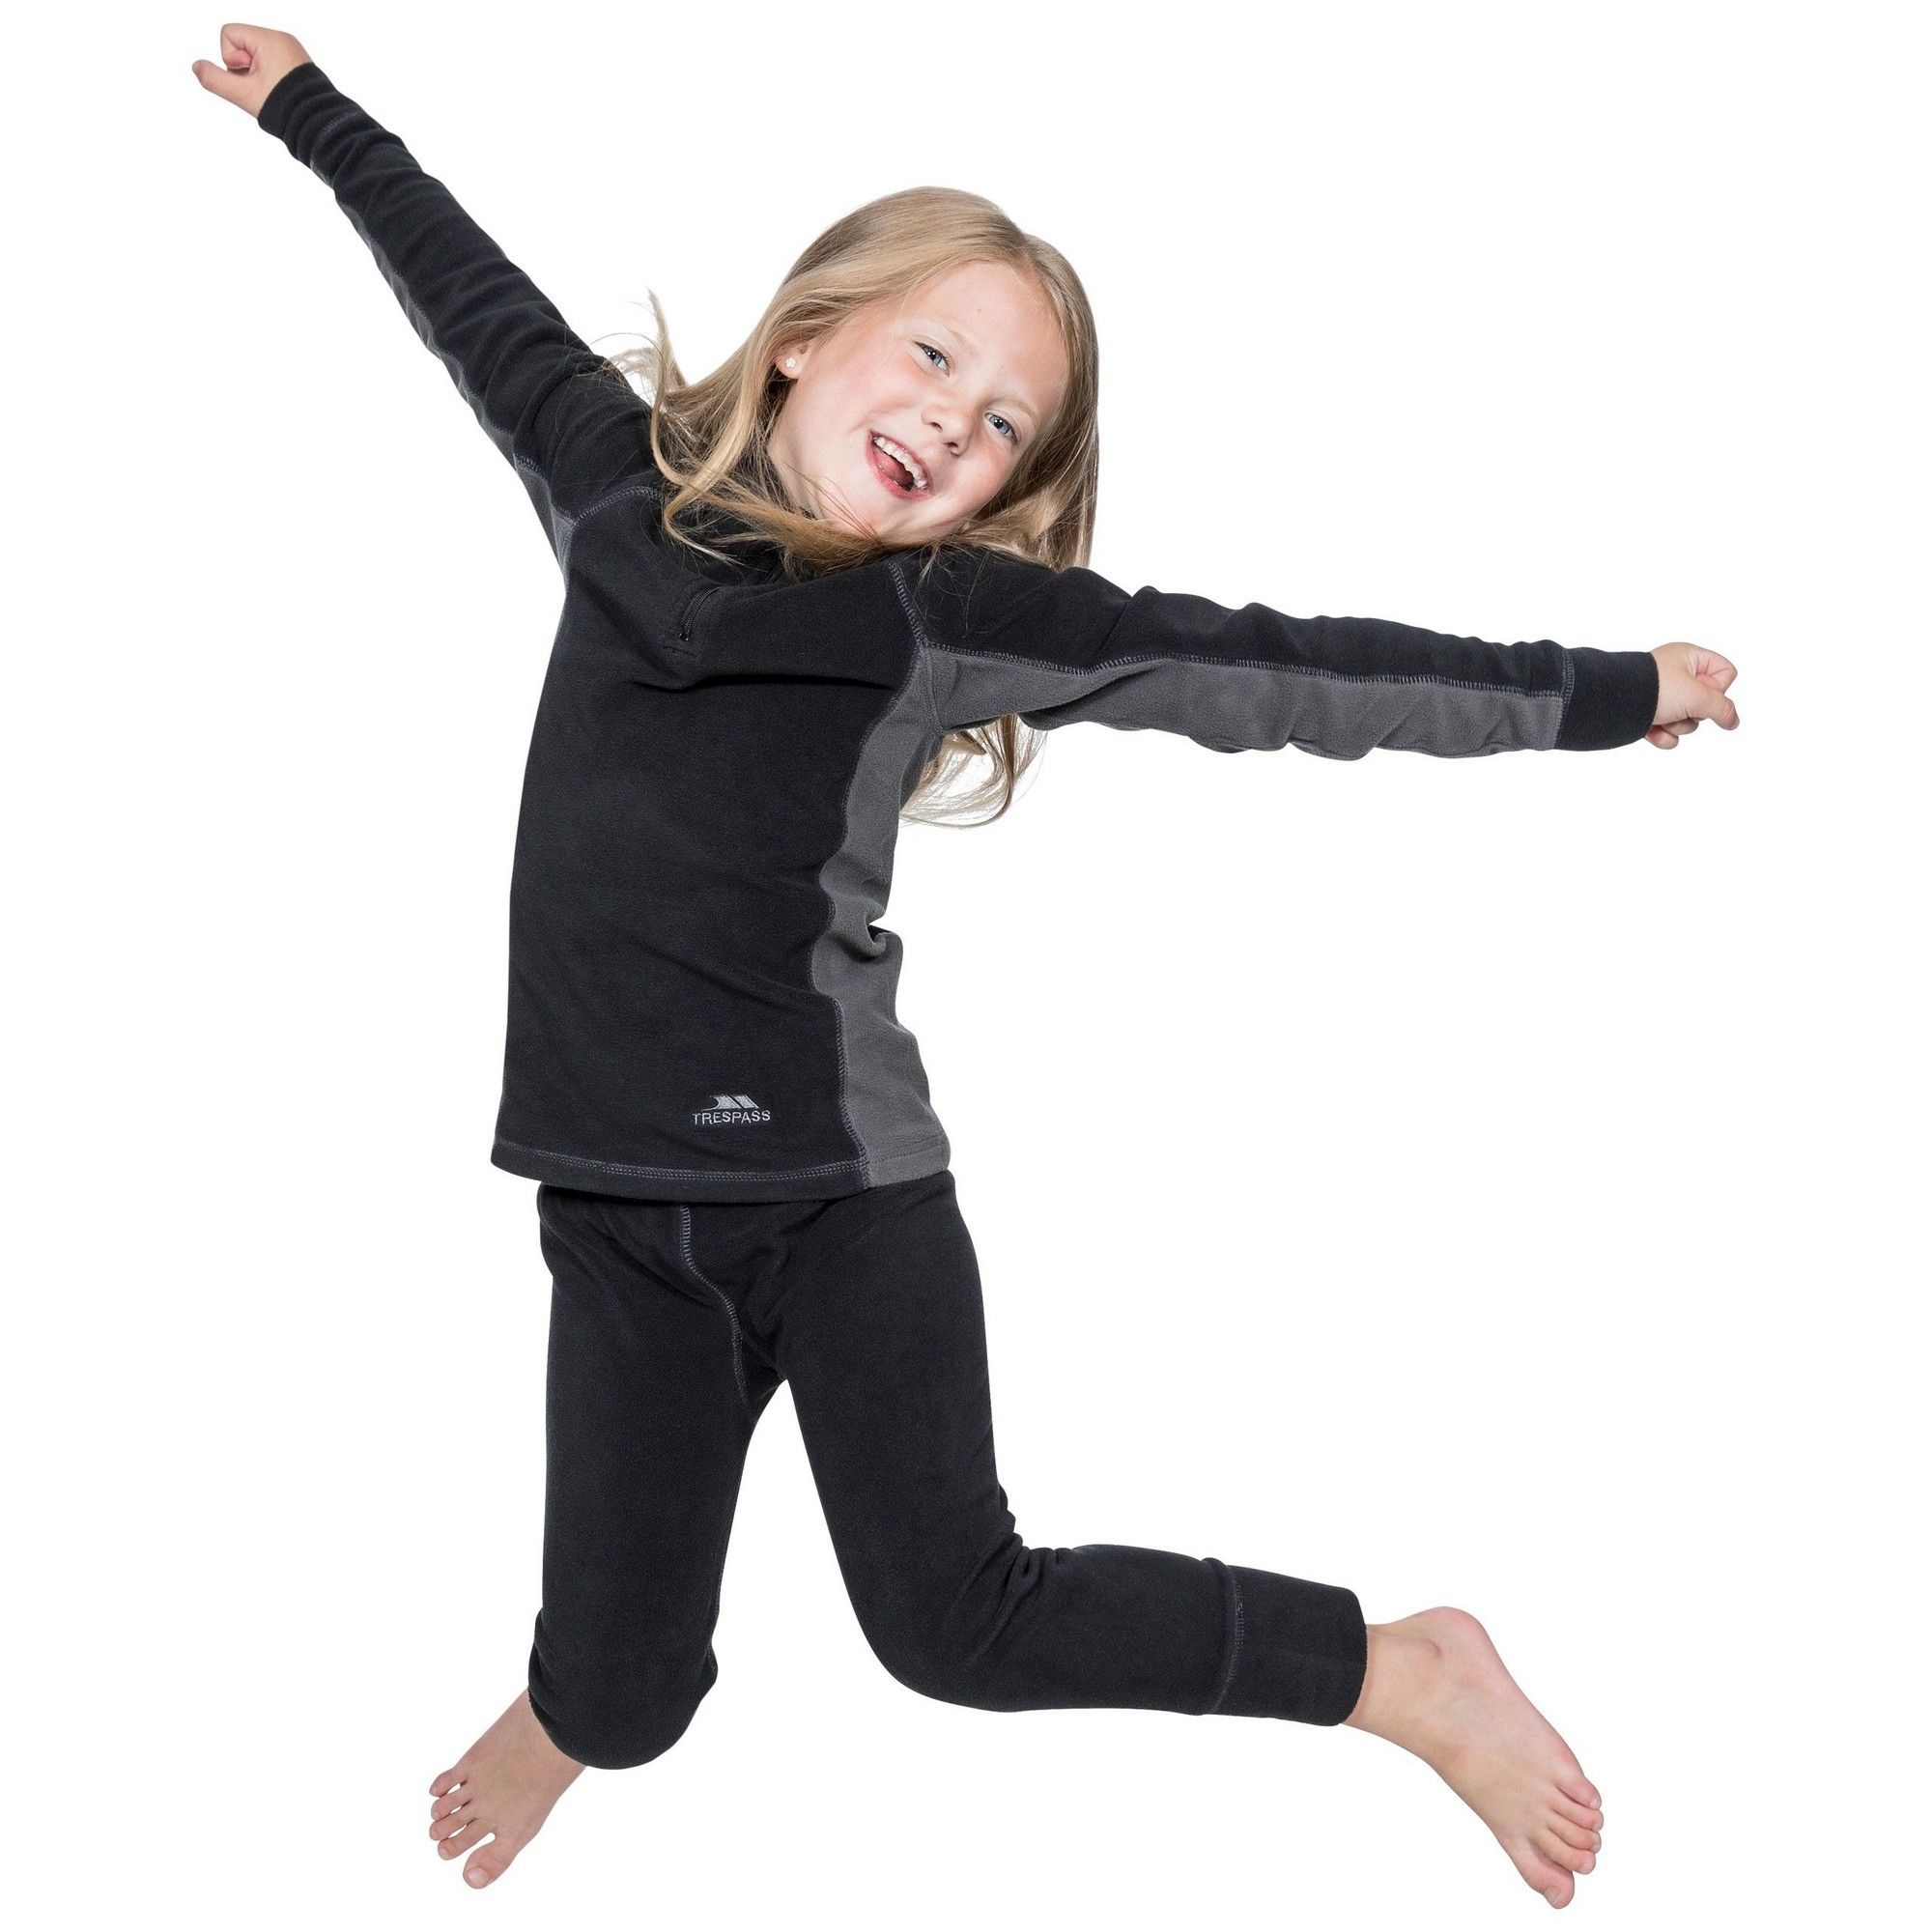 Trespass Childrens/Kids Bubbles Fleece Top And Bottom Base Layers